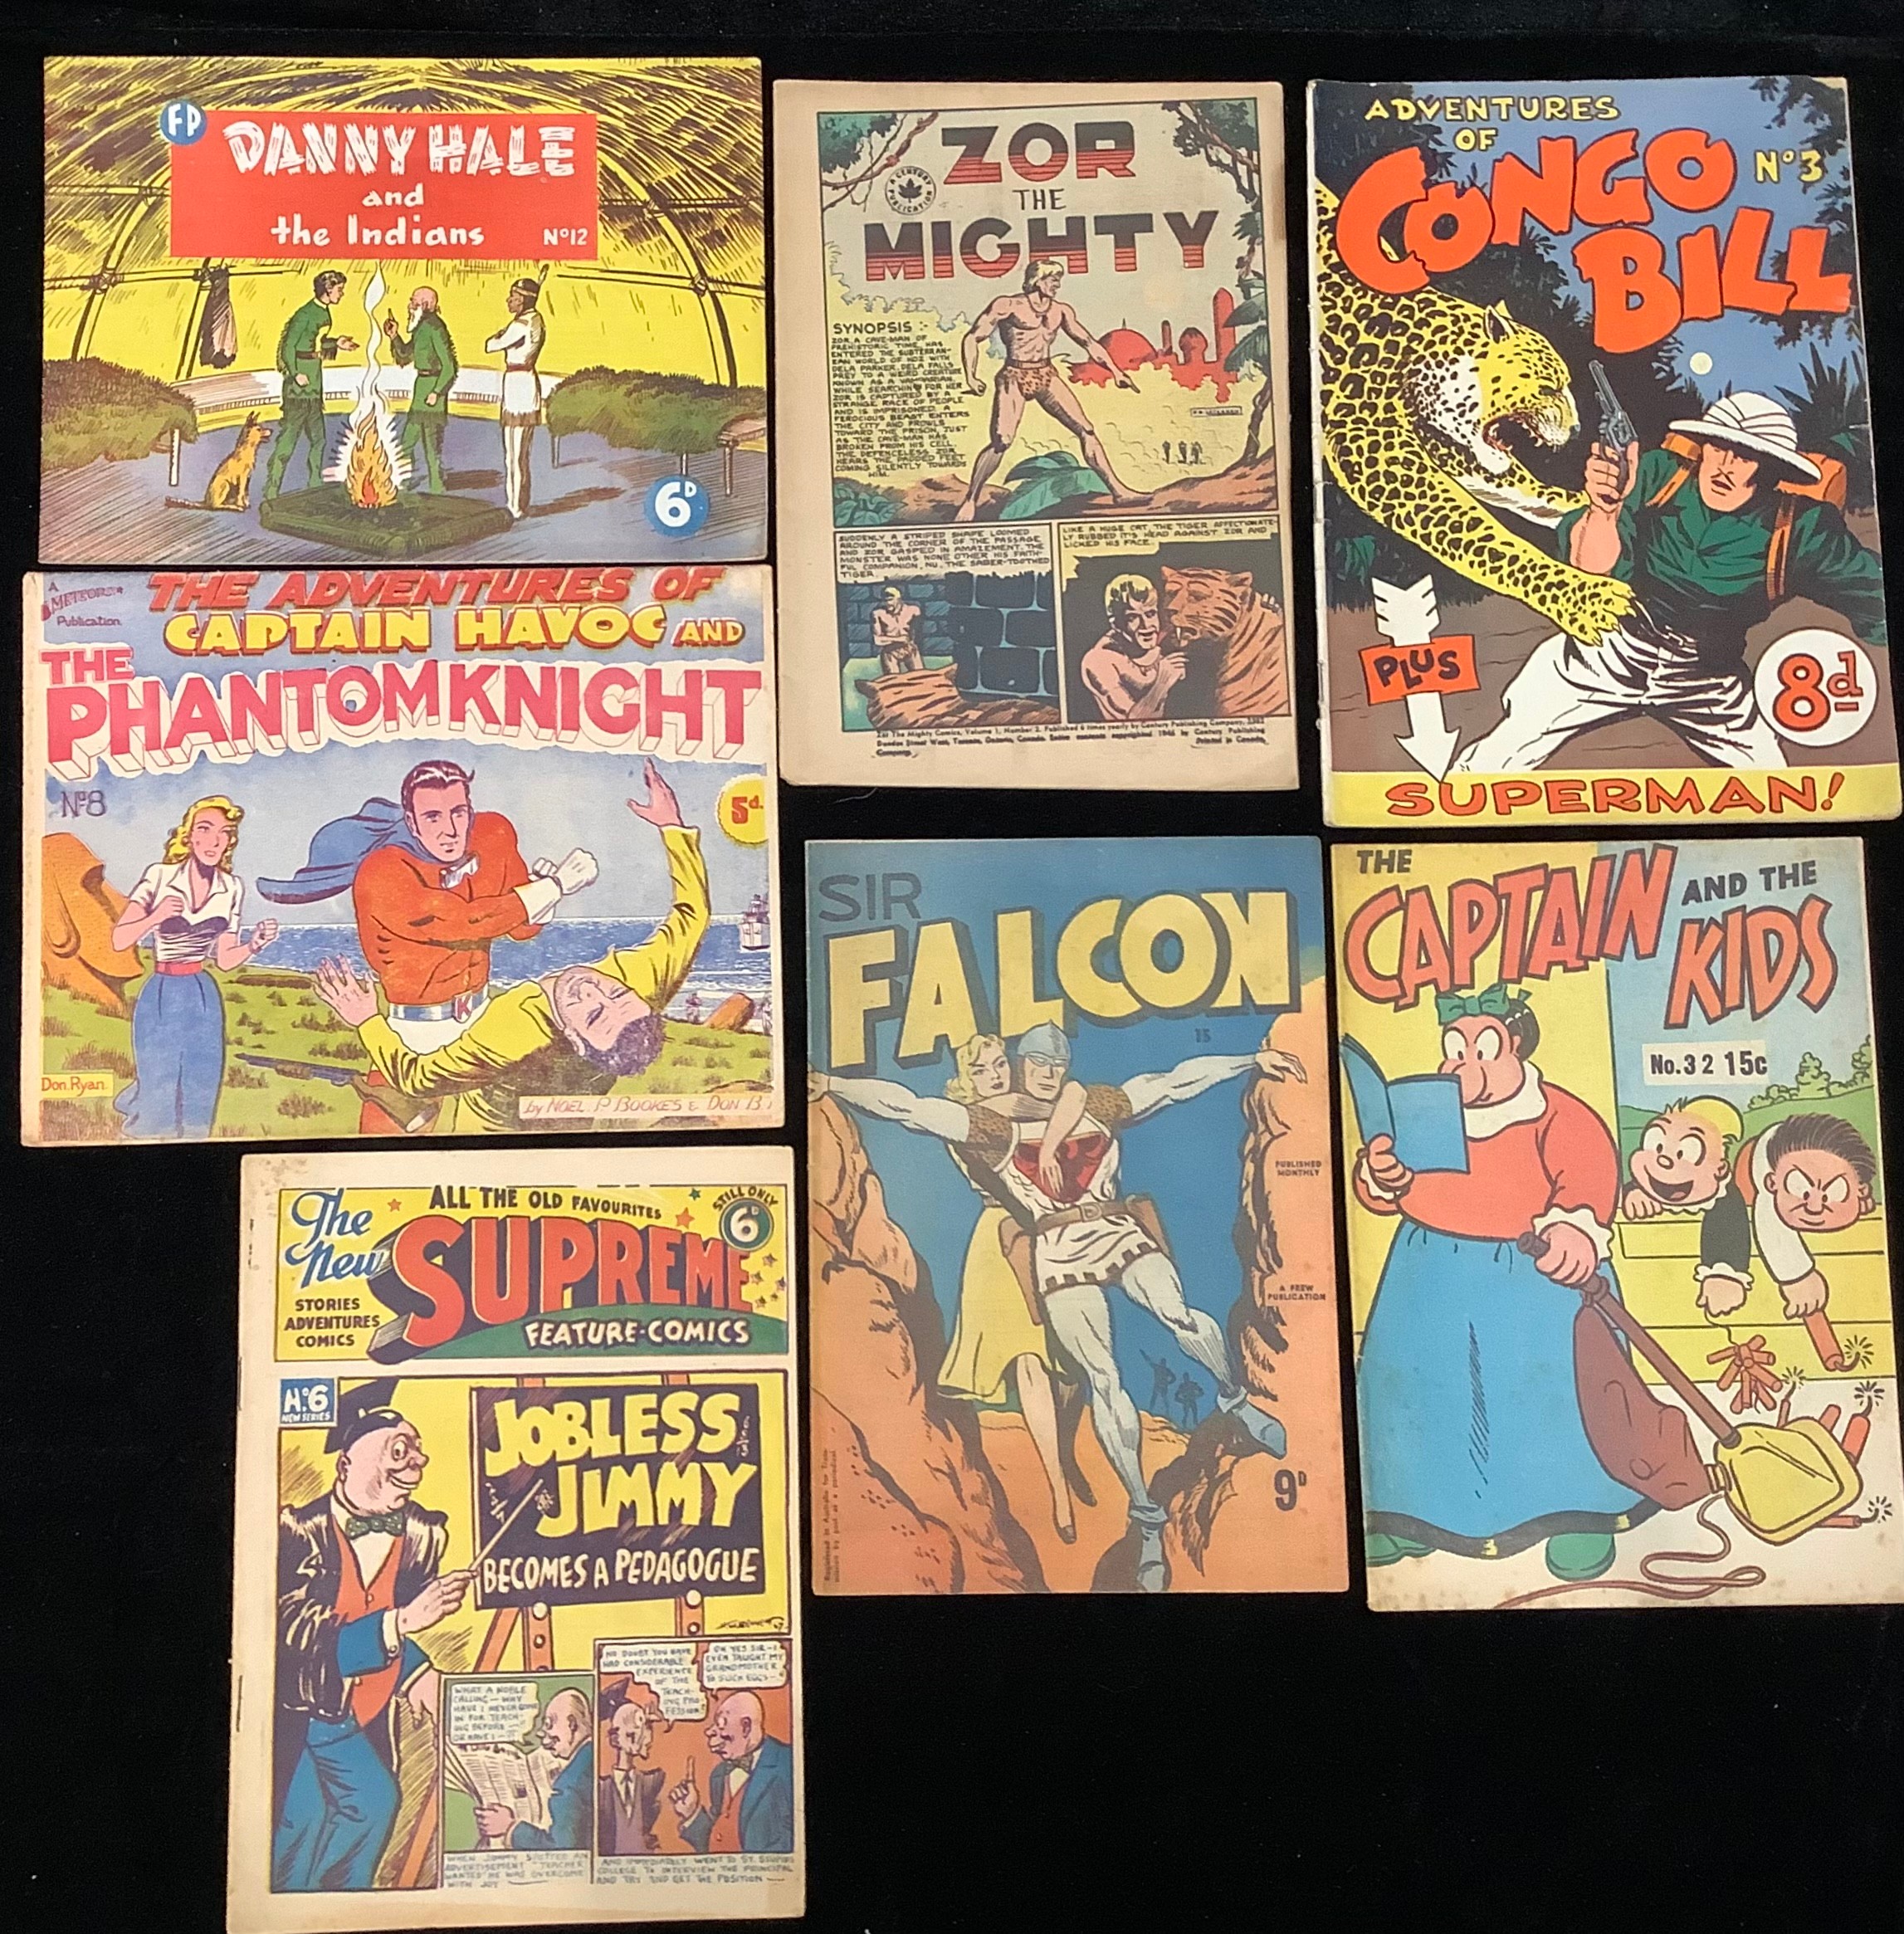 7, Golden Age International comics. (Australia, Canada, New Zealand). Sir Falcon #15 (1956). Zor The